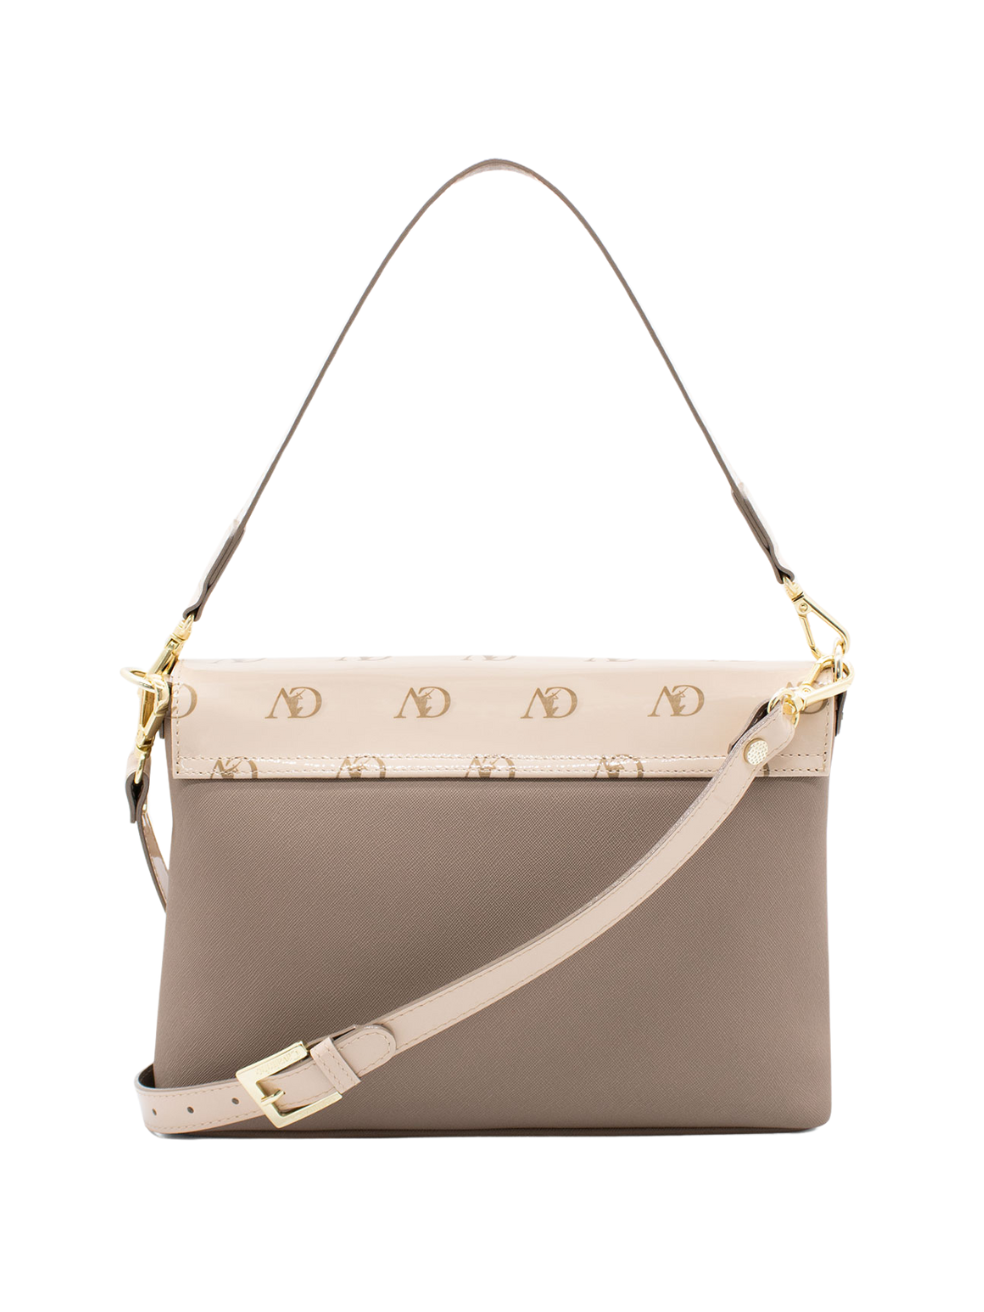 Cavalinho Signature 3 in 1: Leather Clutch, Handbag or Crossbody Bag SKU 18740509.31 #color_sand / beige